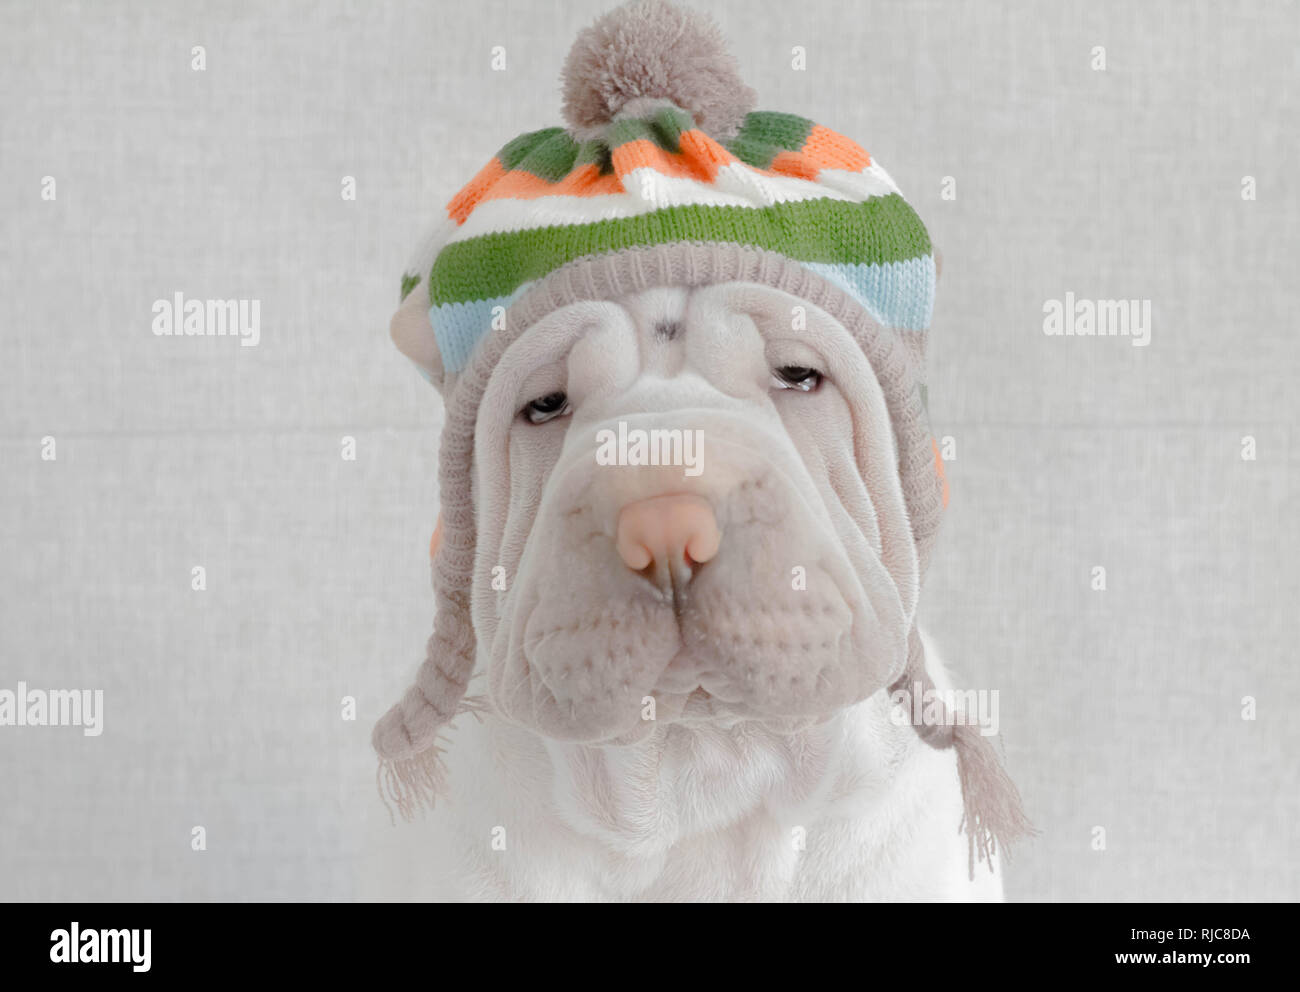 Shar pei dog wearing a woolly hat Stock Photo